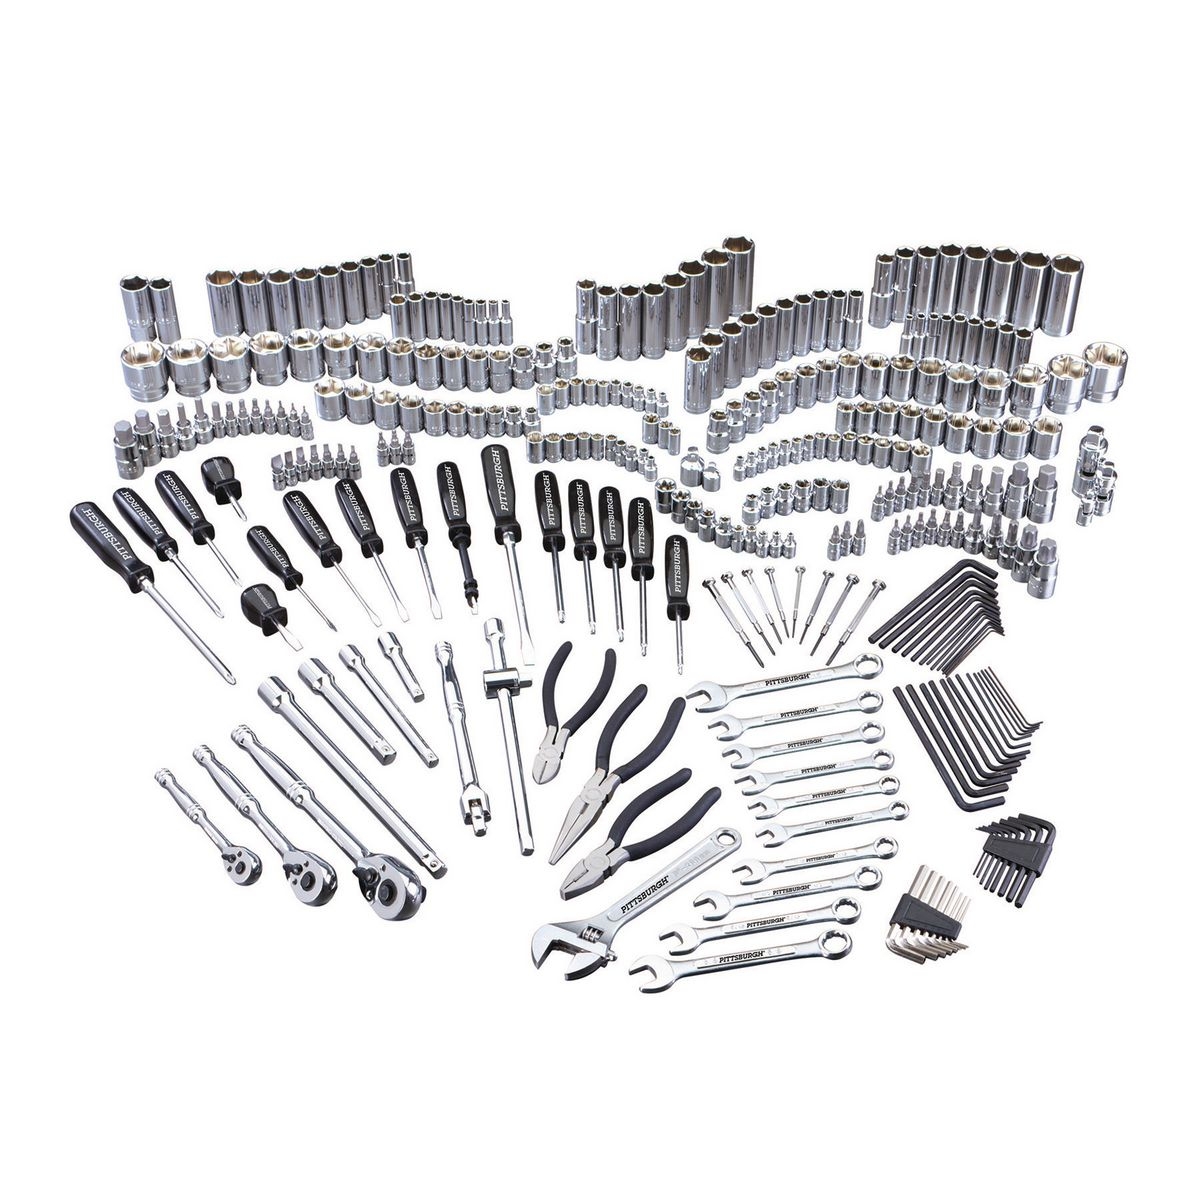 PITTSBURGH® 301 Pc Mechanic's Tool Set - Item 63464 / 45951 / 69312 / 63457